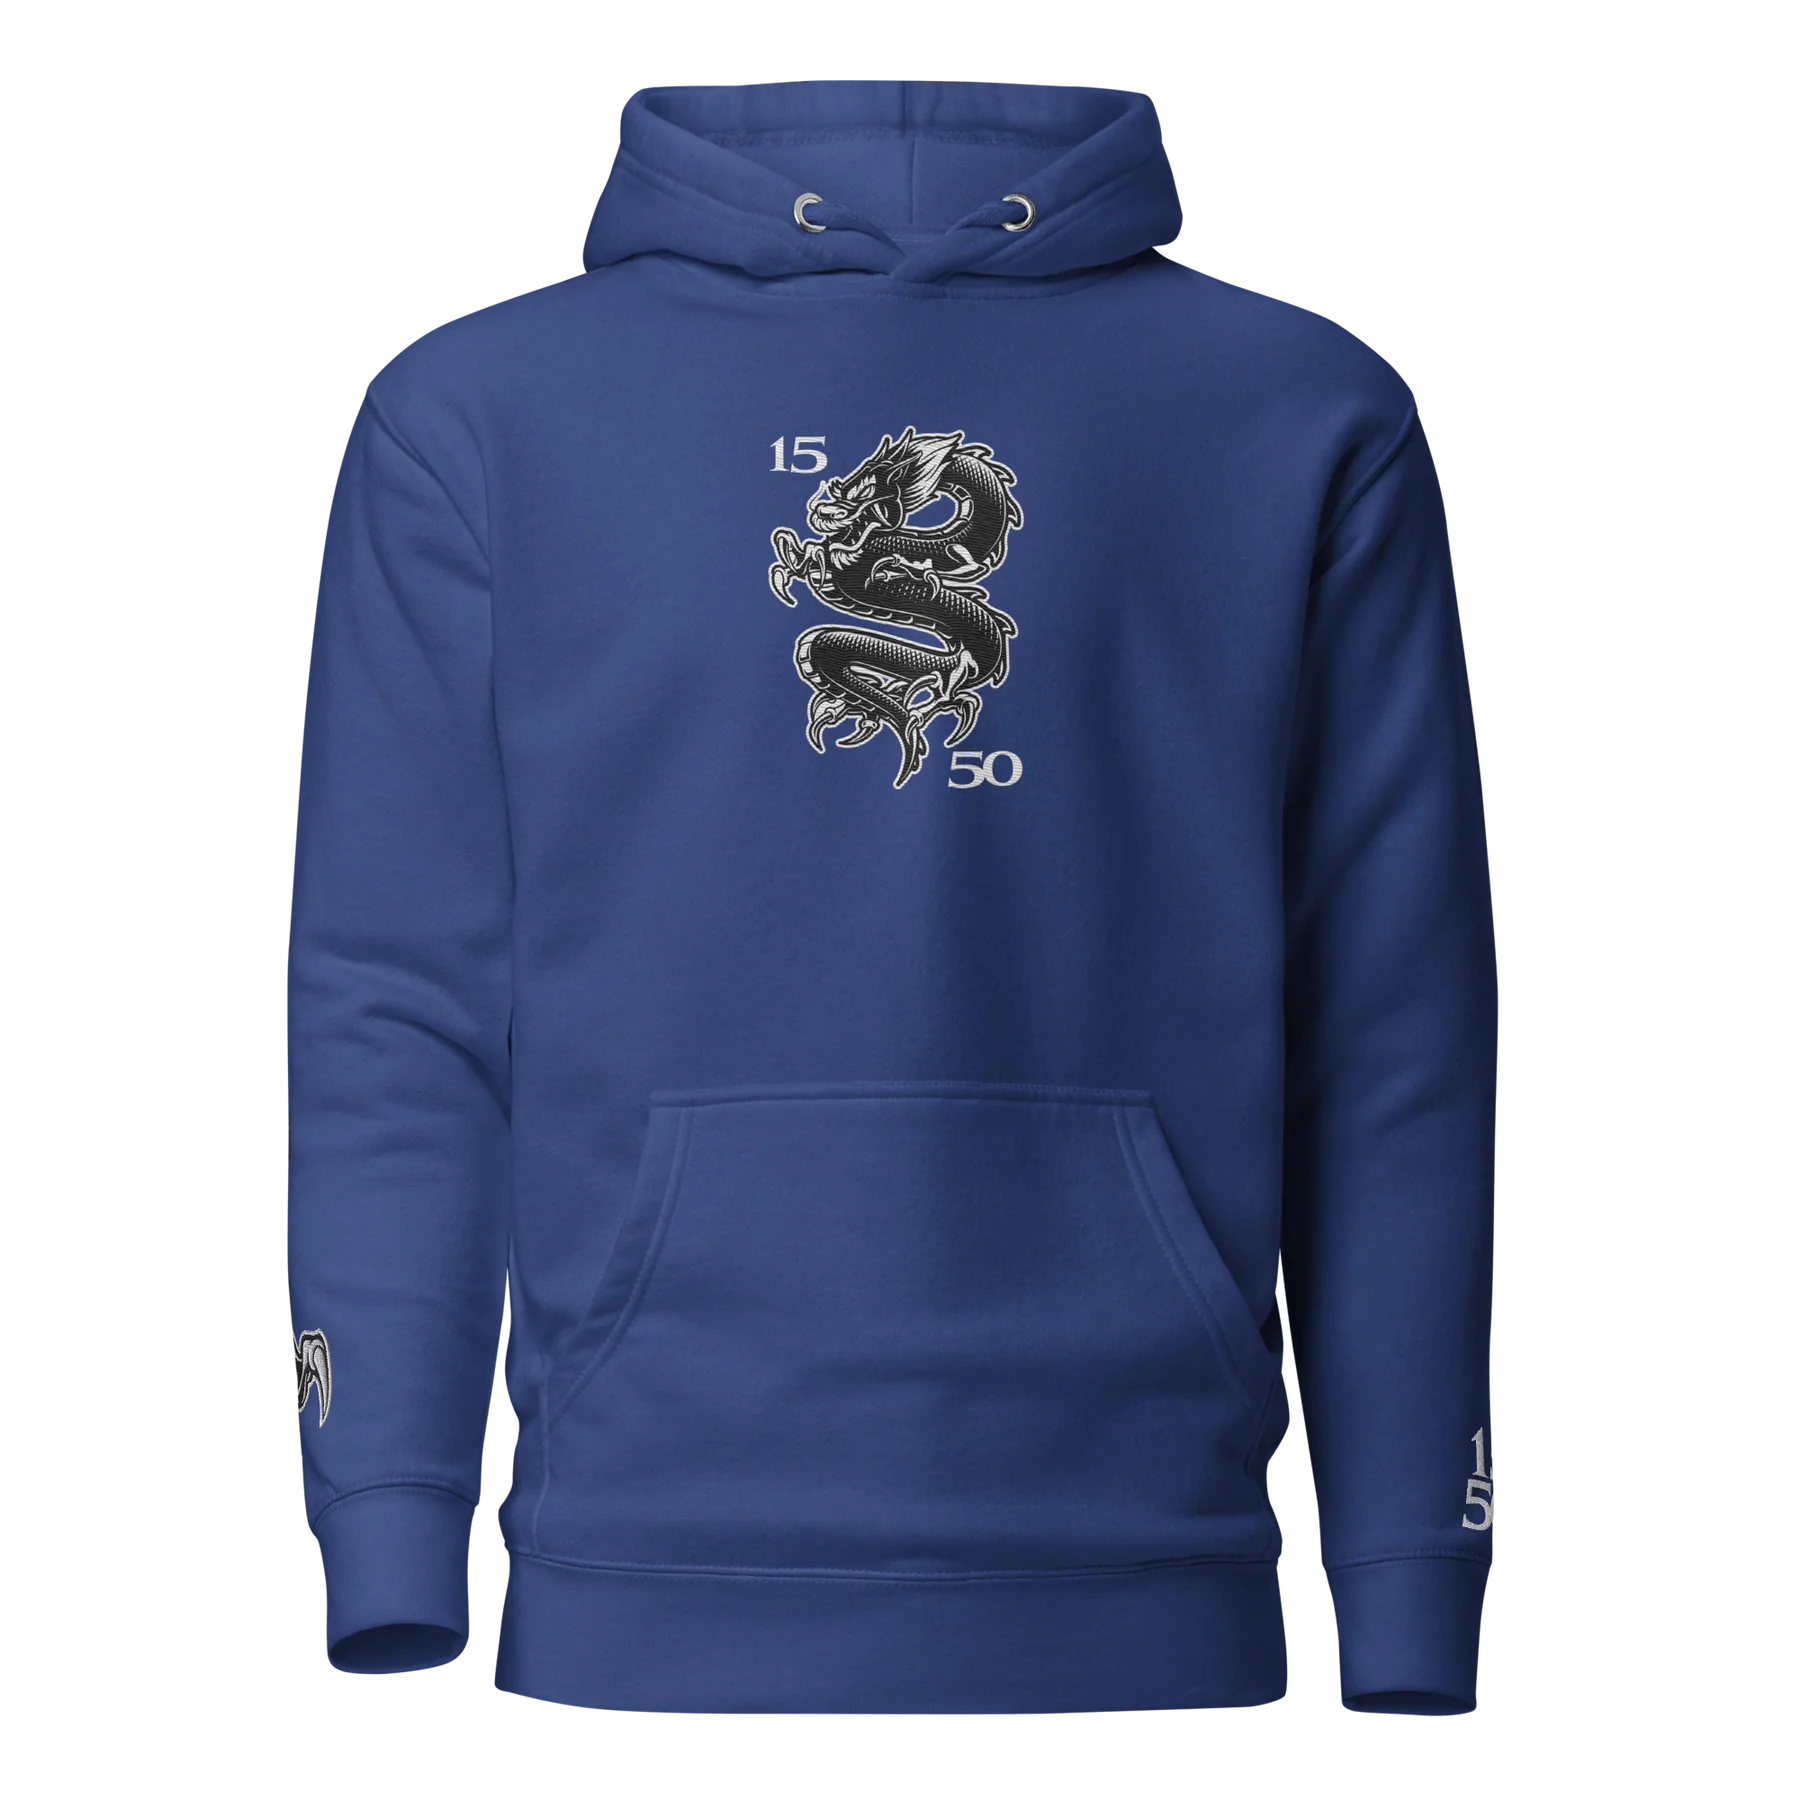 1550 Brand Be a Dragon hoodie design